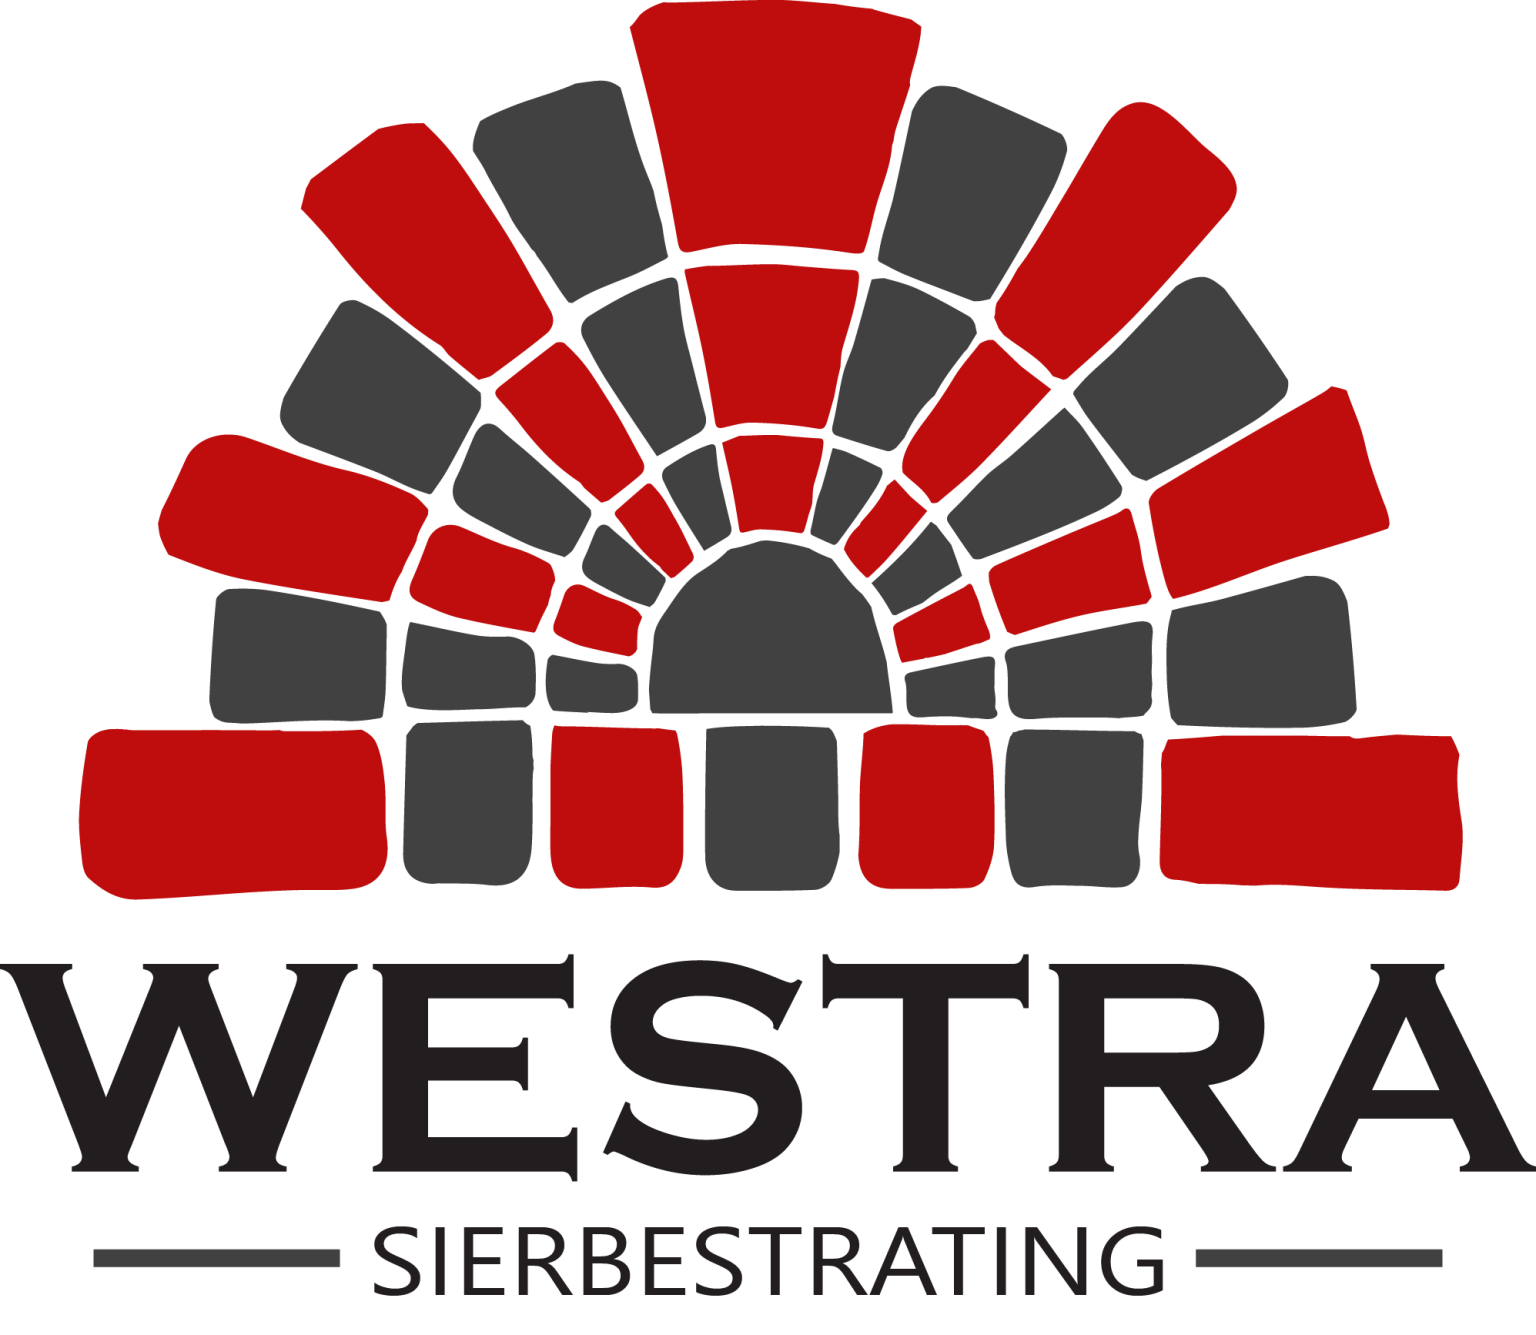 Westra Bestratingen Final 1 1536x1335 1